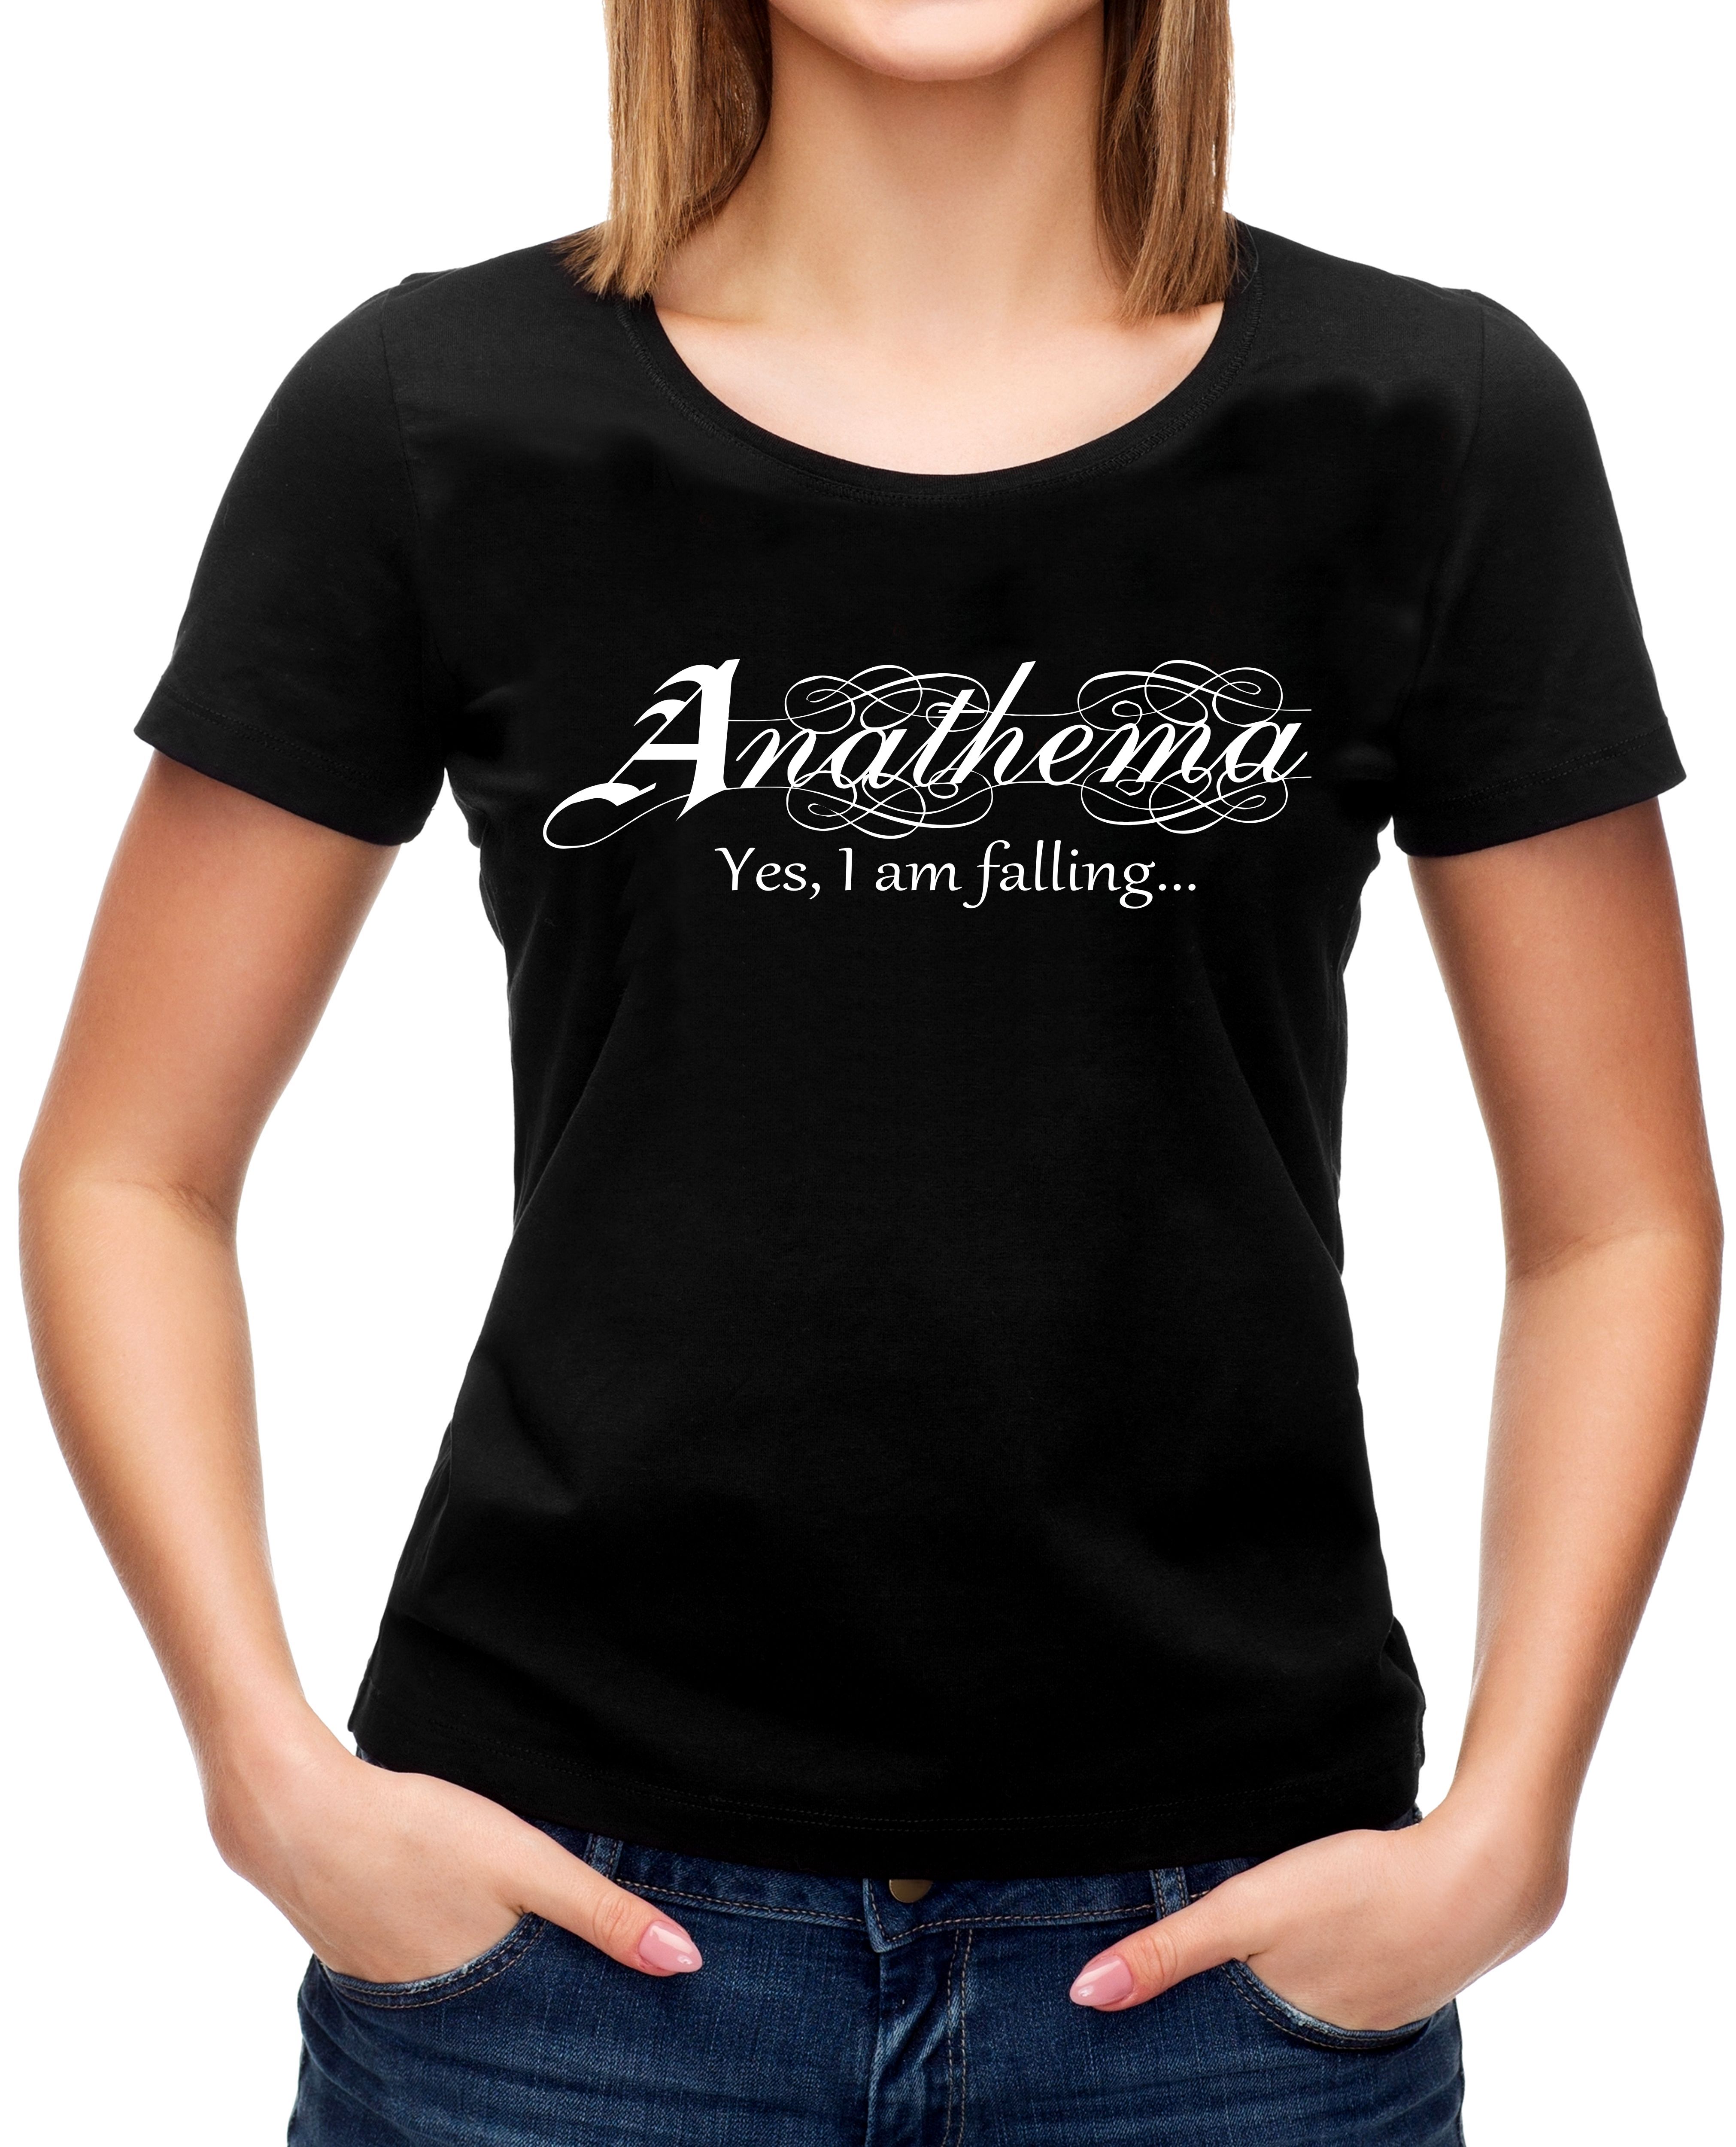 anathema t shirt